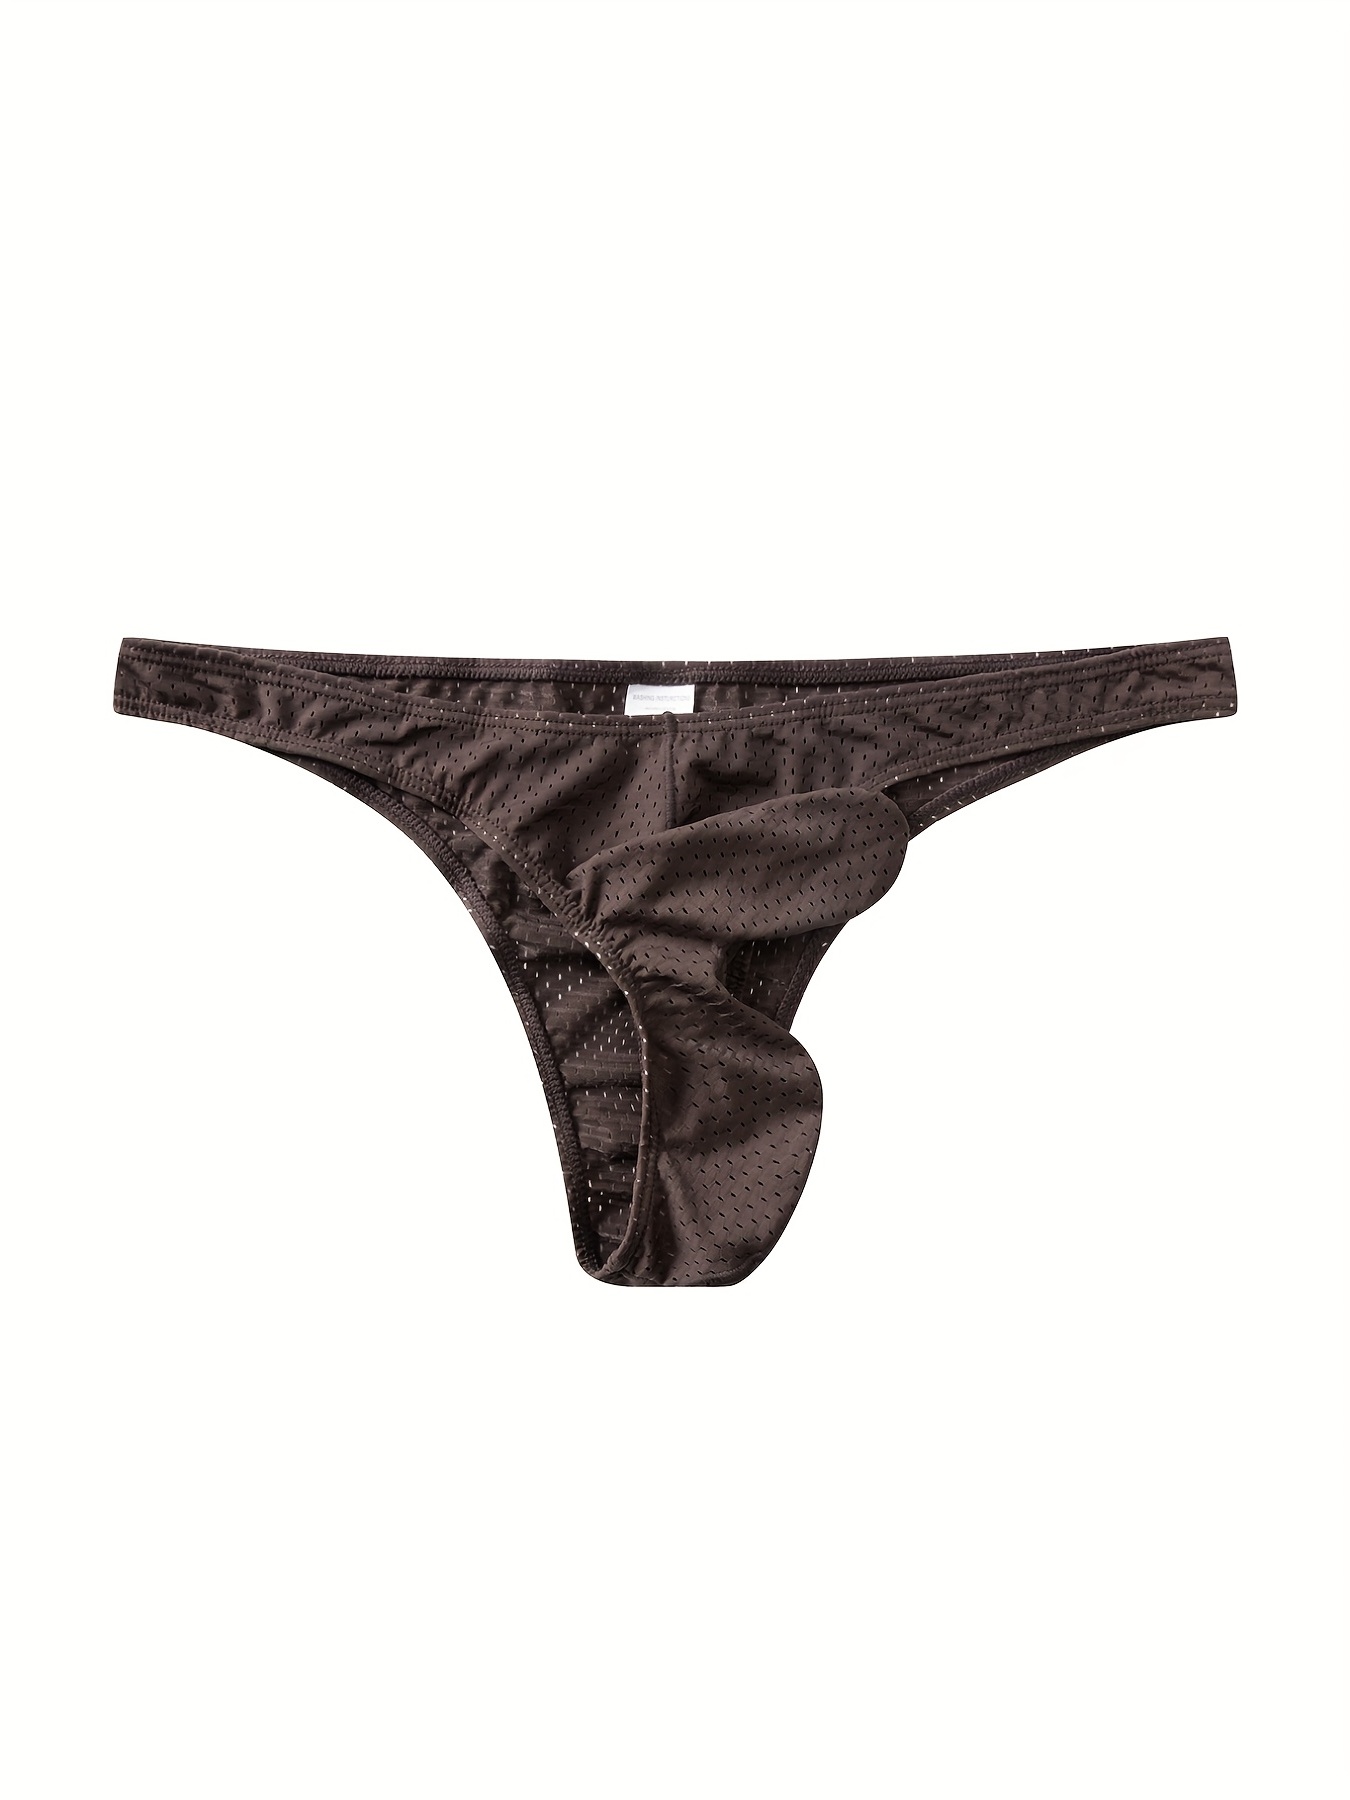 4pcs Men Panties Novelty Elephant Panties G-strings Panties Thongs